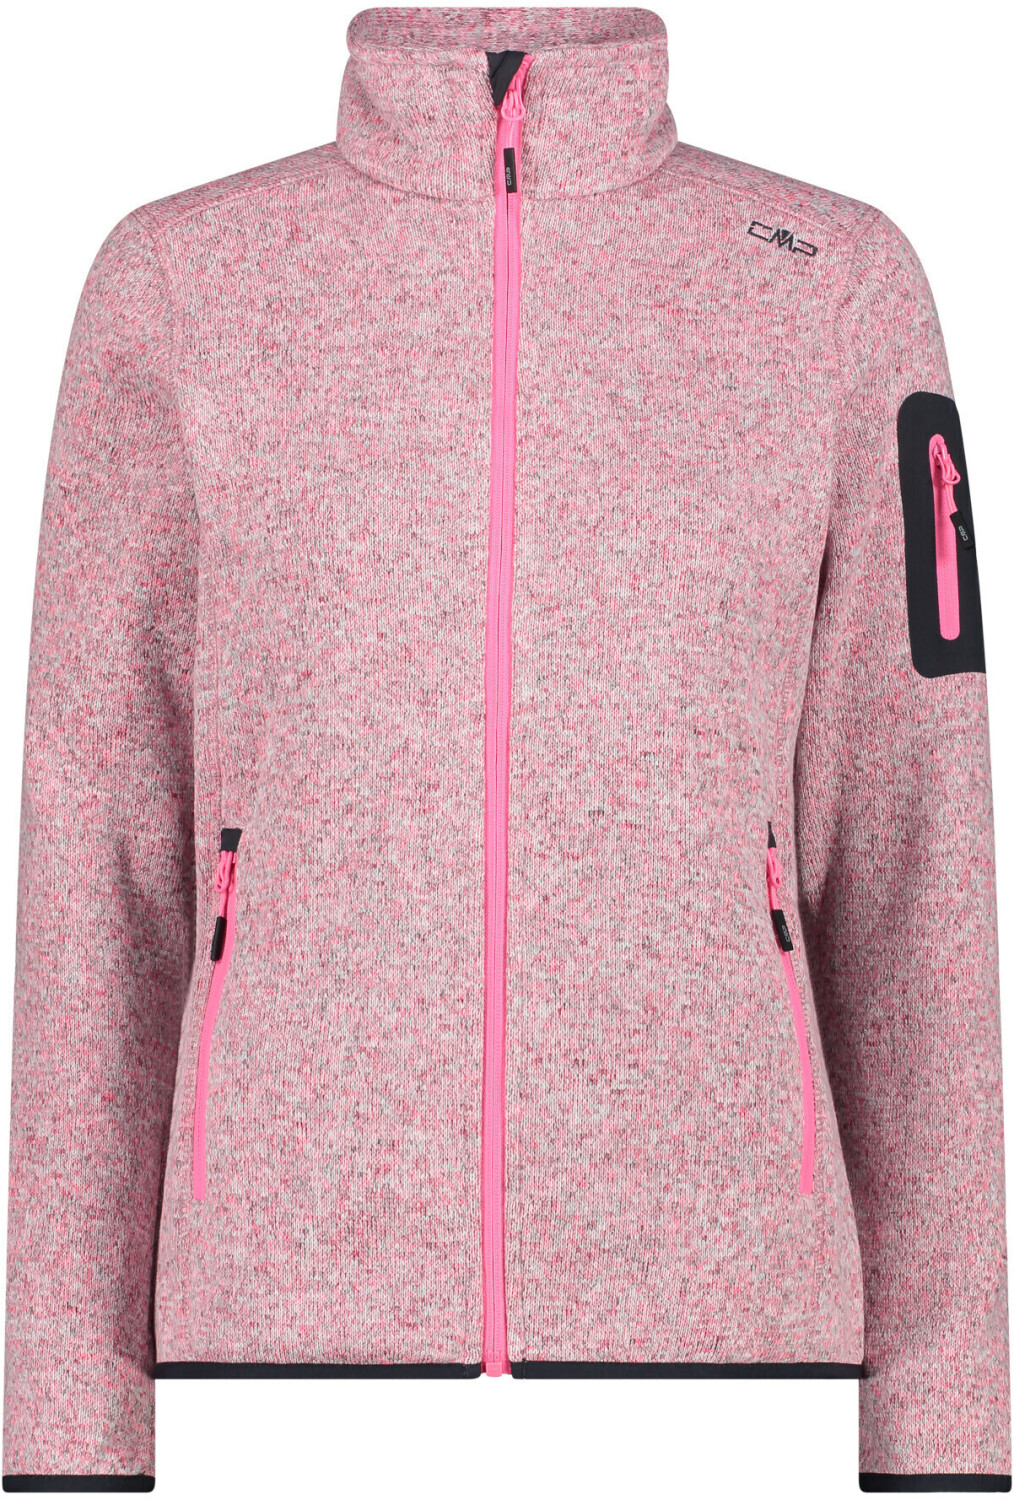 Buy CMP Fleece £34.99 (Today) from Best Melange – fluo-bianco pink on Jacket Knit-Tech Deals (3H14746)